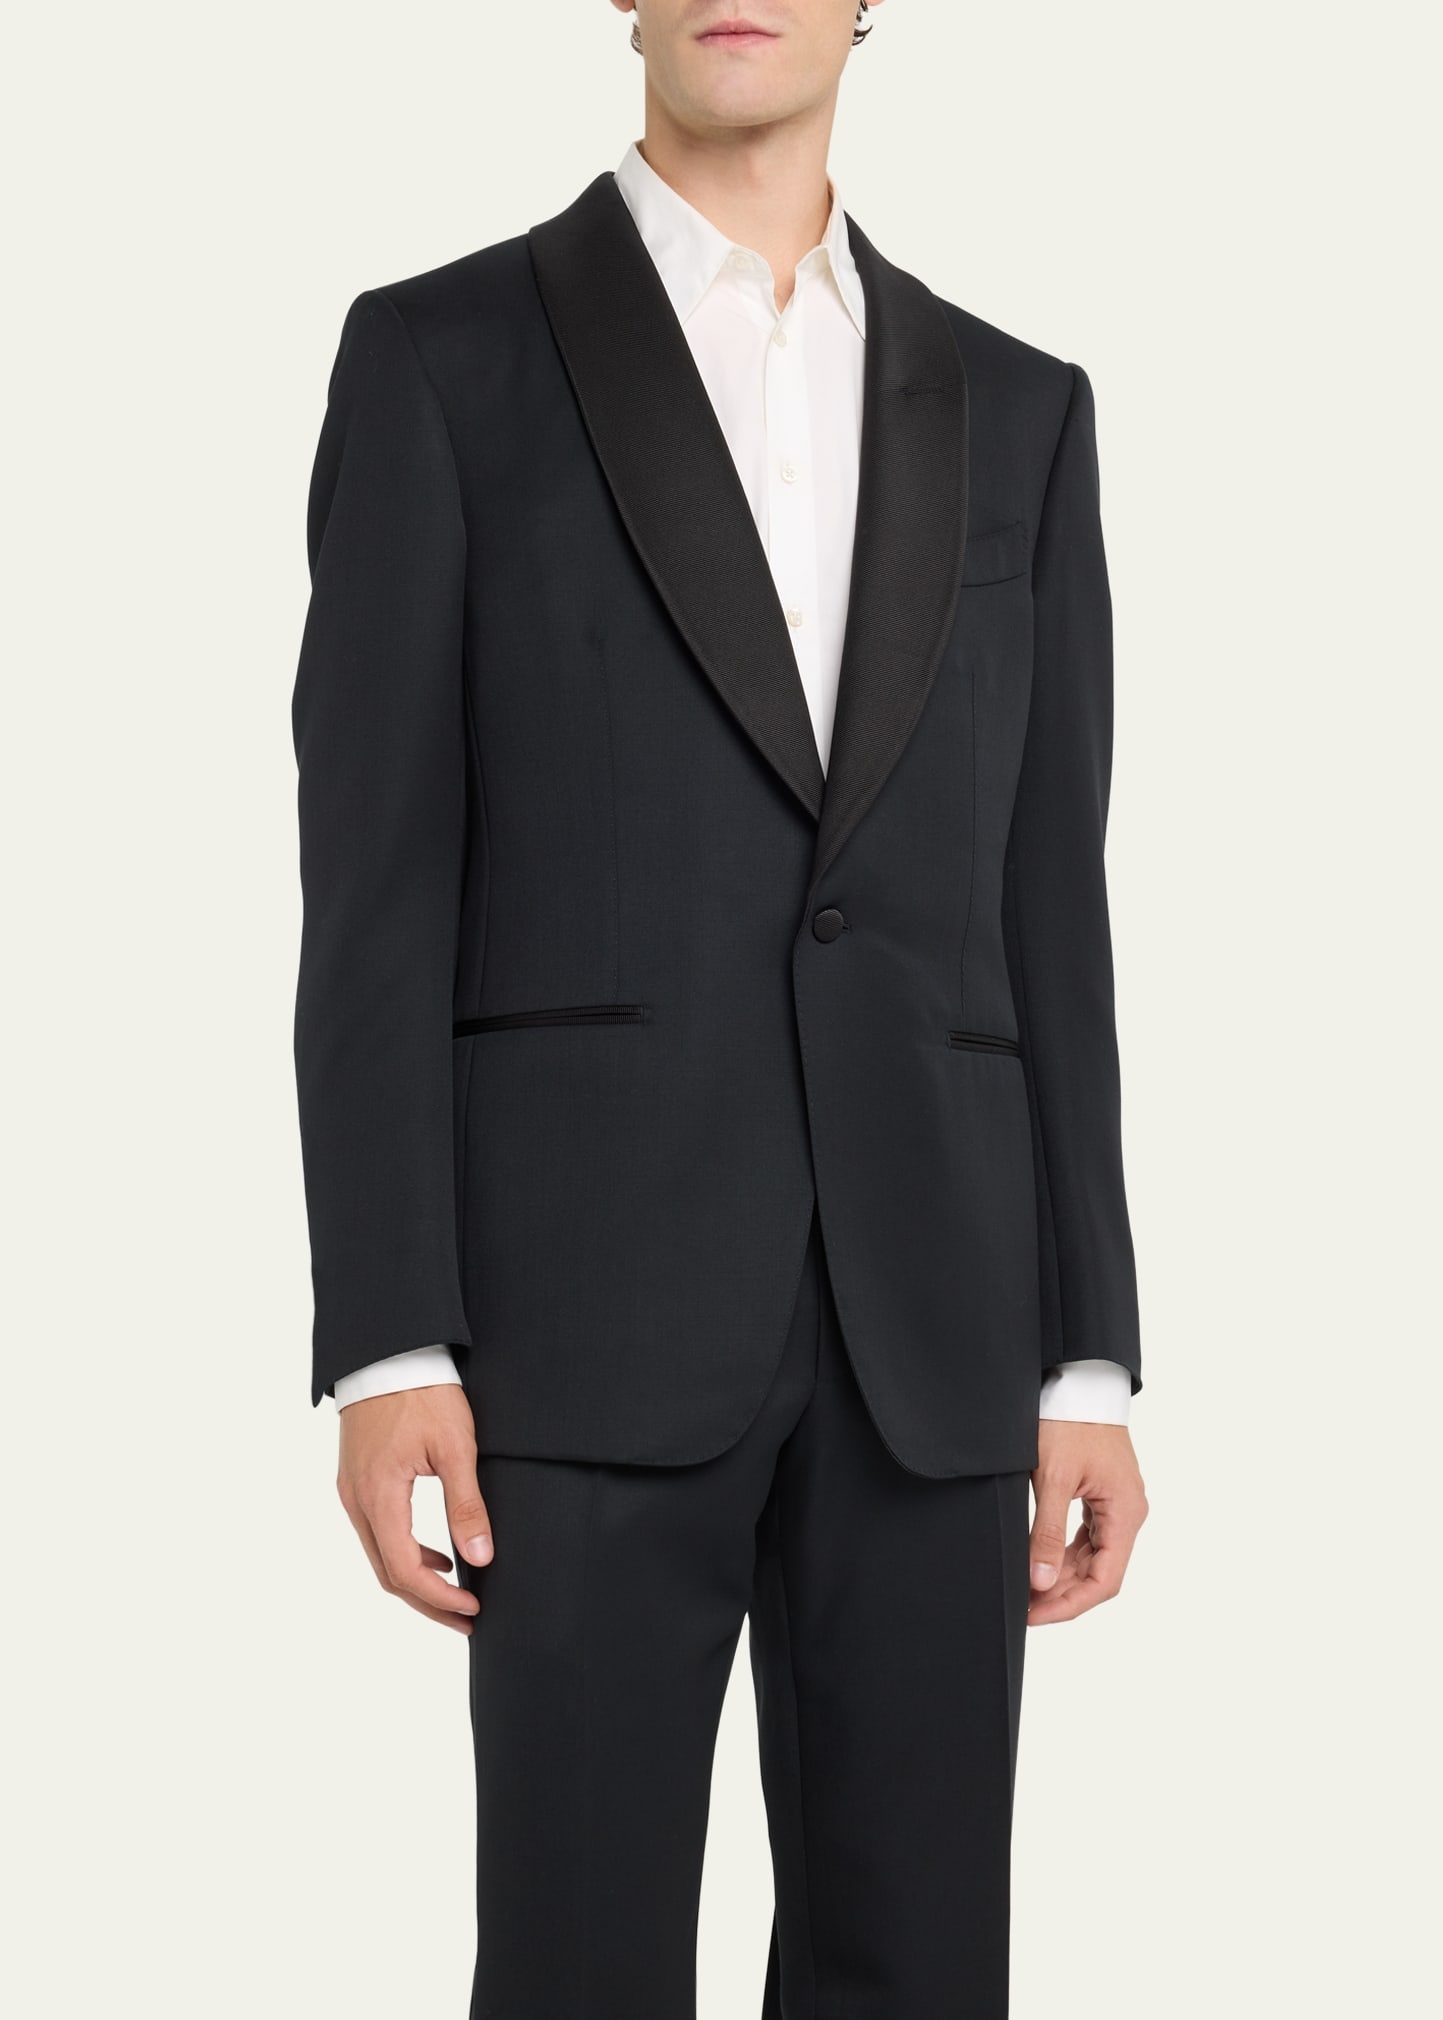 Men's Windsor Shawl Tuxedo - 4